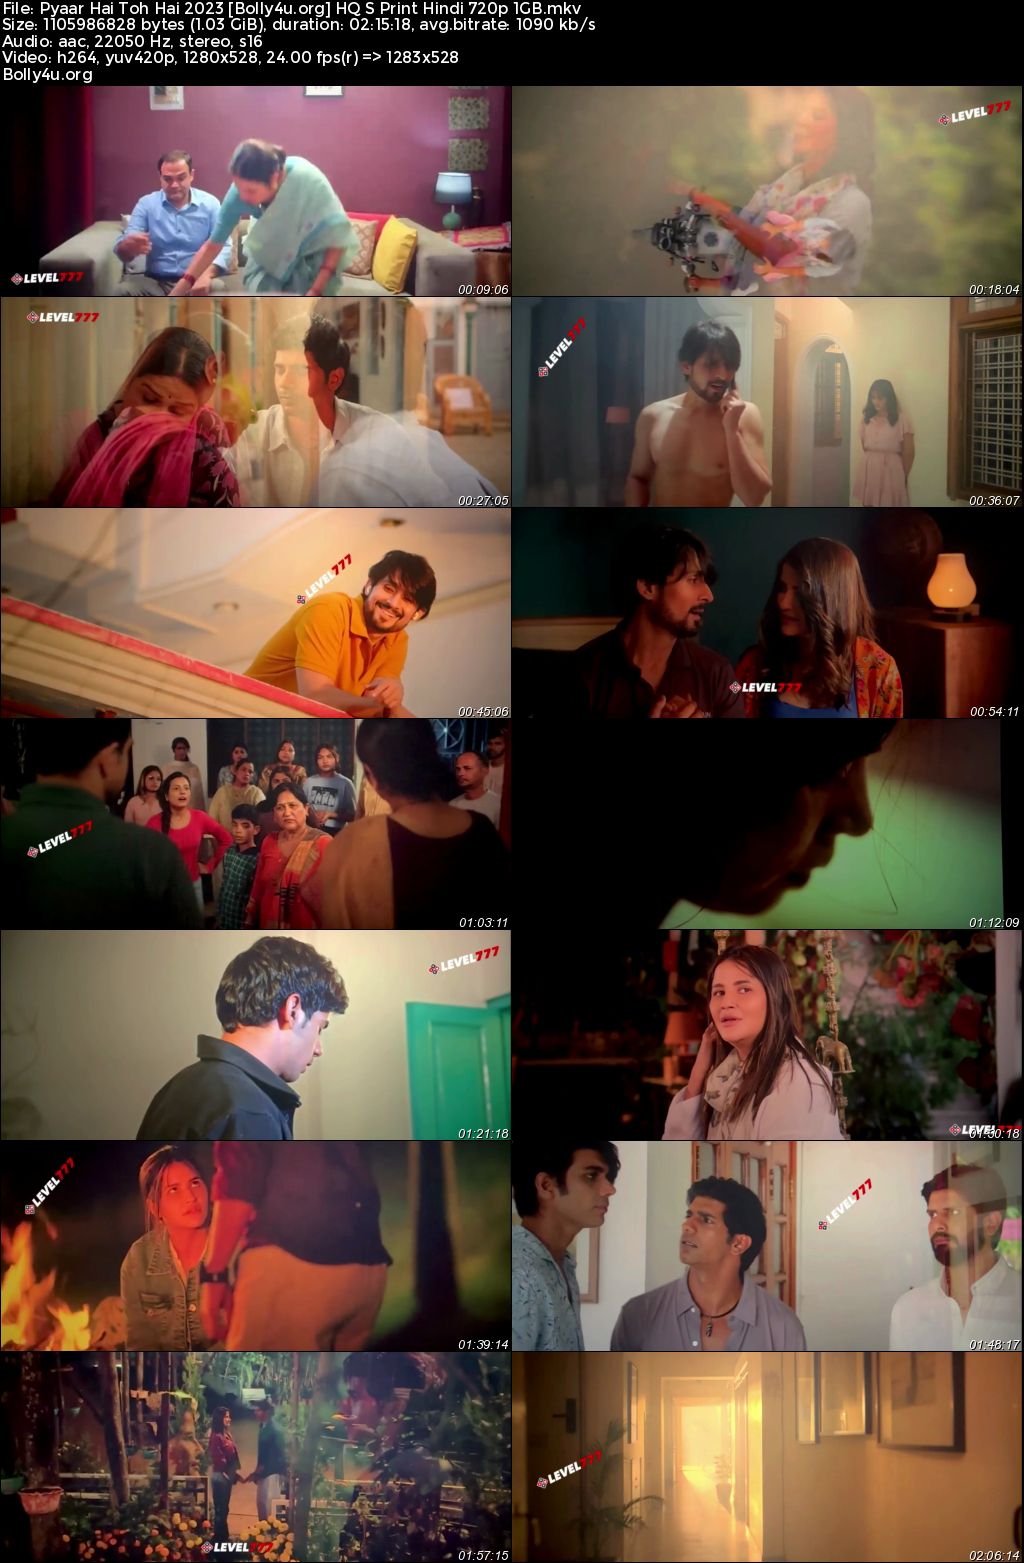 Pyaar Hai Toh Hai 2023 HQ S Print Hindi Full Movie Download 1080p 720p 480p